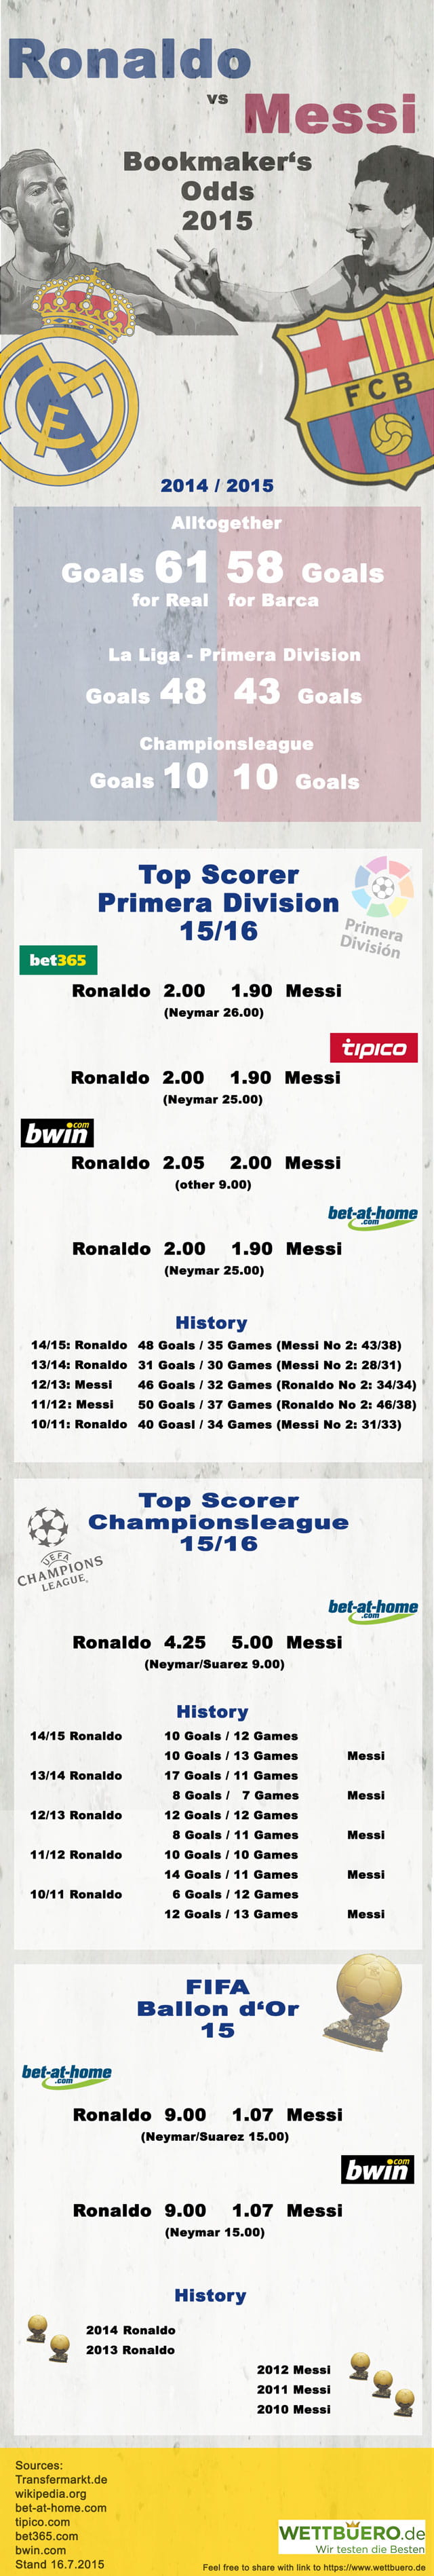 Ronaldo vs Messi Quotenvergleich